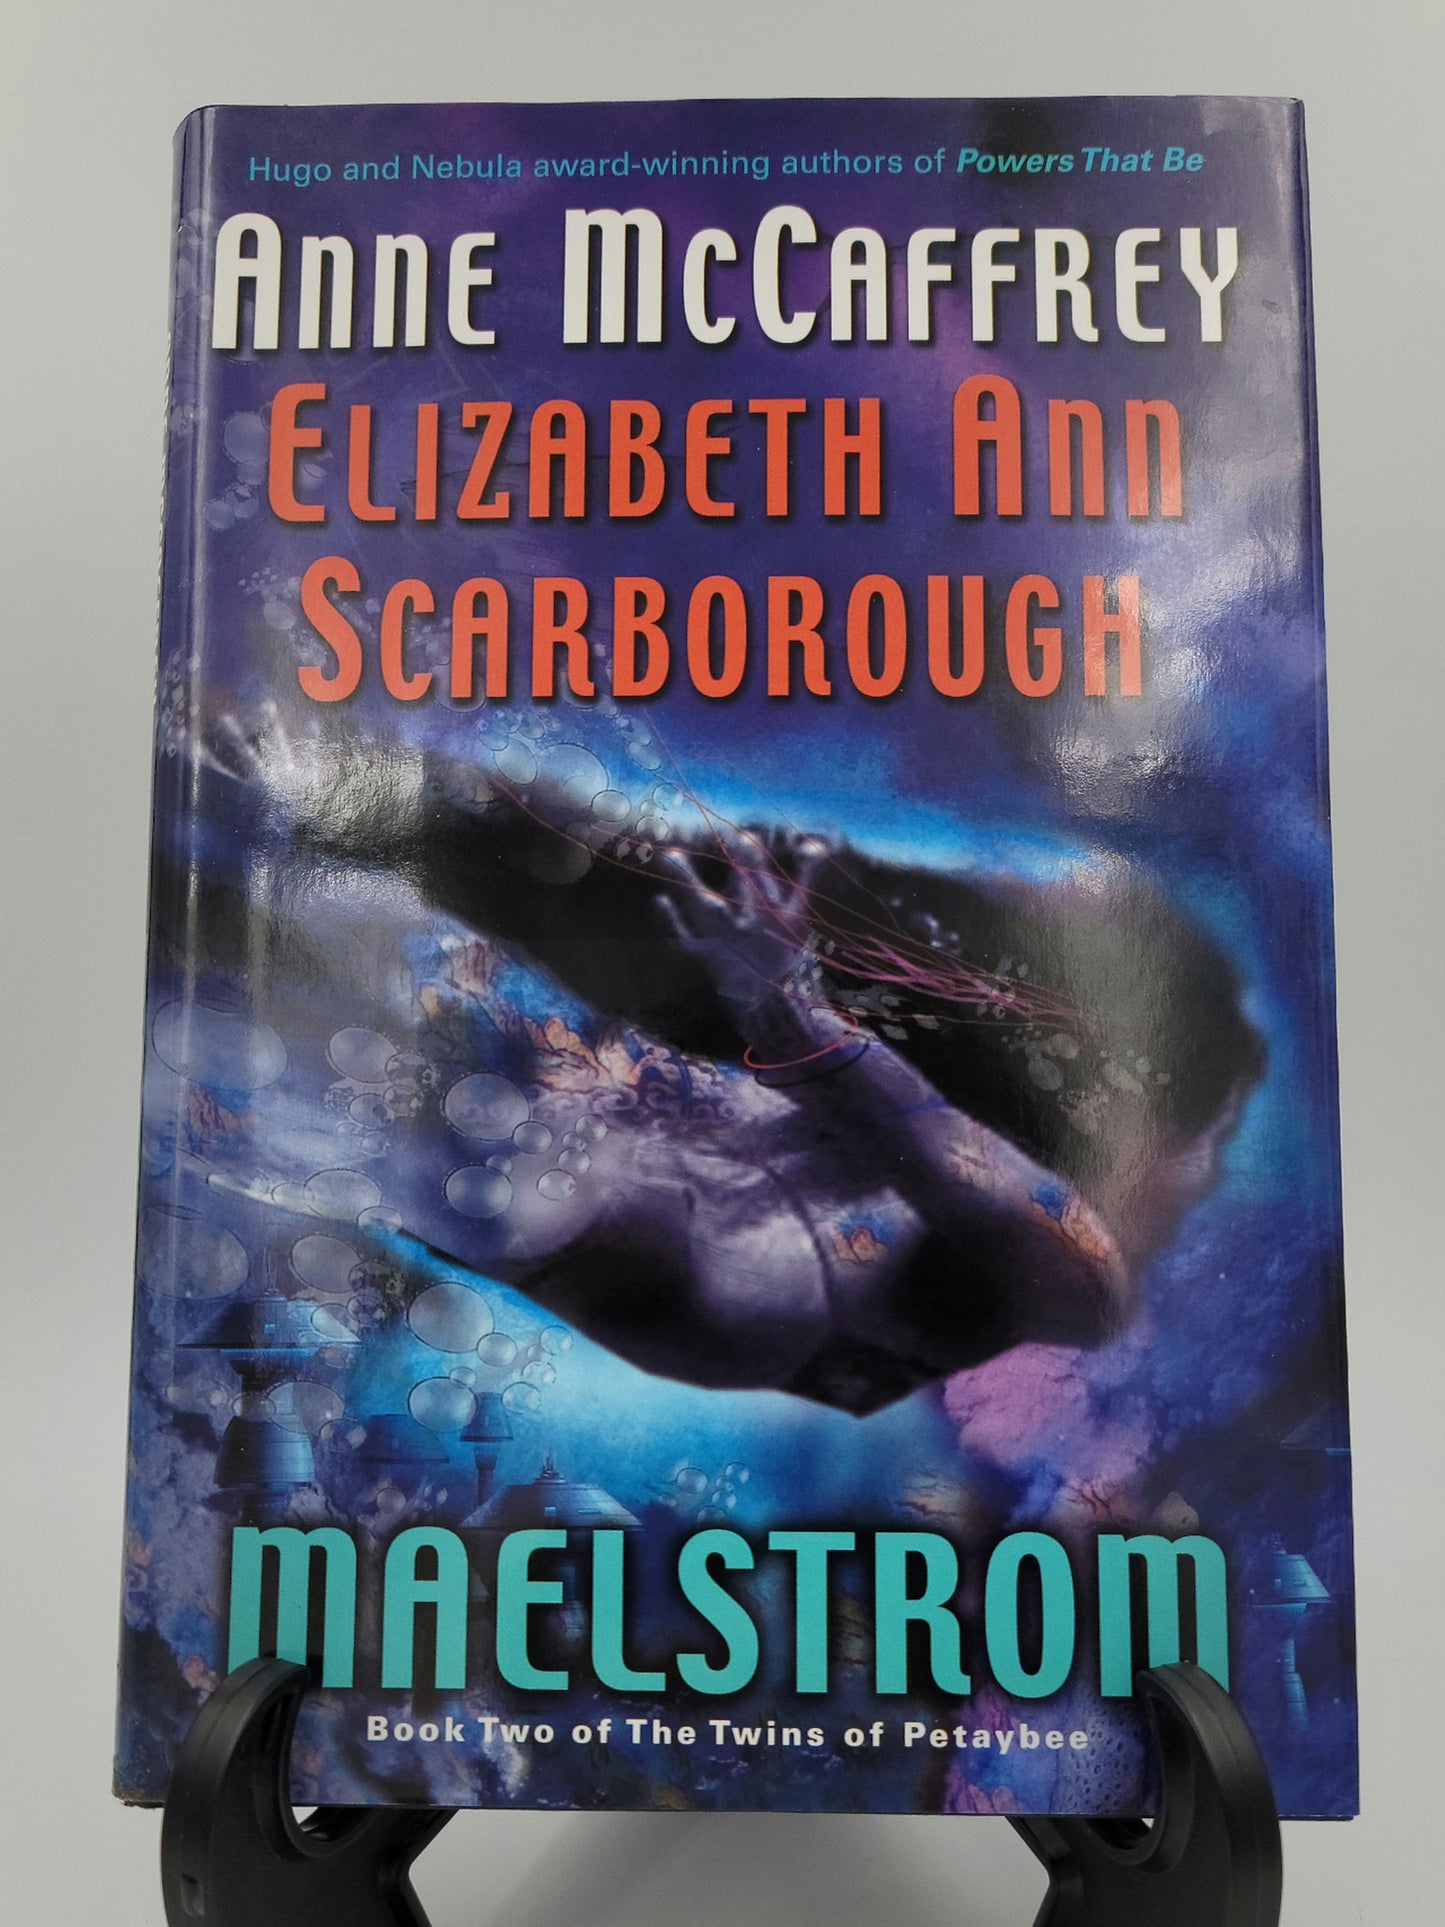 Maelstrom By: Anne McCaffrey and Elizabeth Ann Scarborough (Twins of Petaybee Series #2)